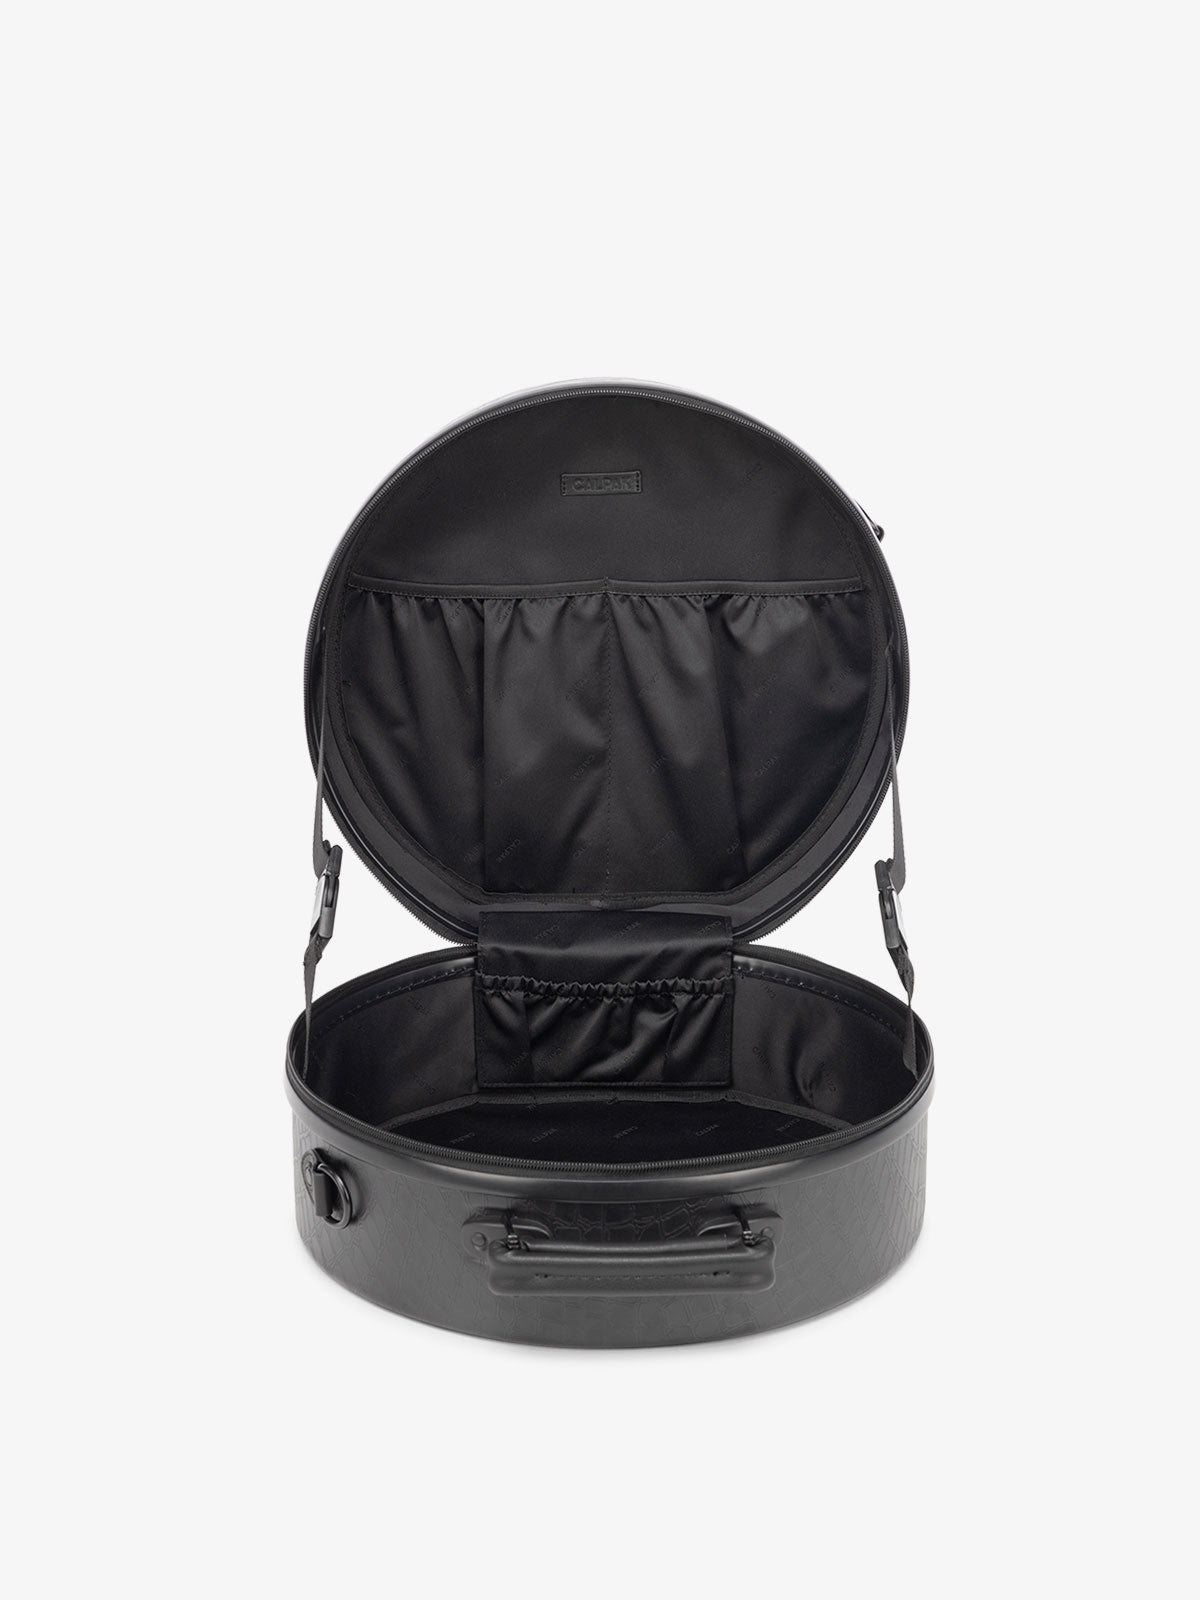 Black Leather Petite Round Hat Box